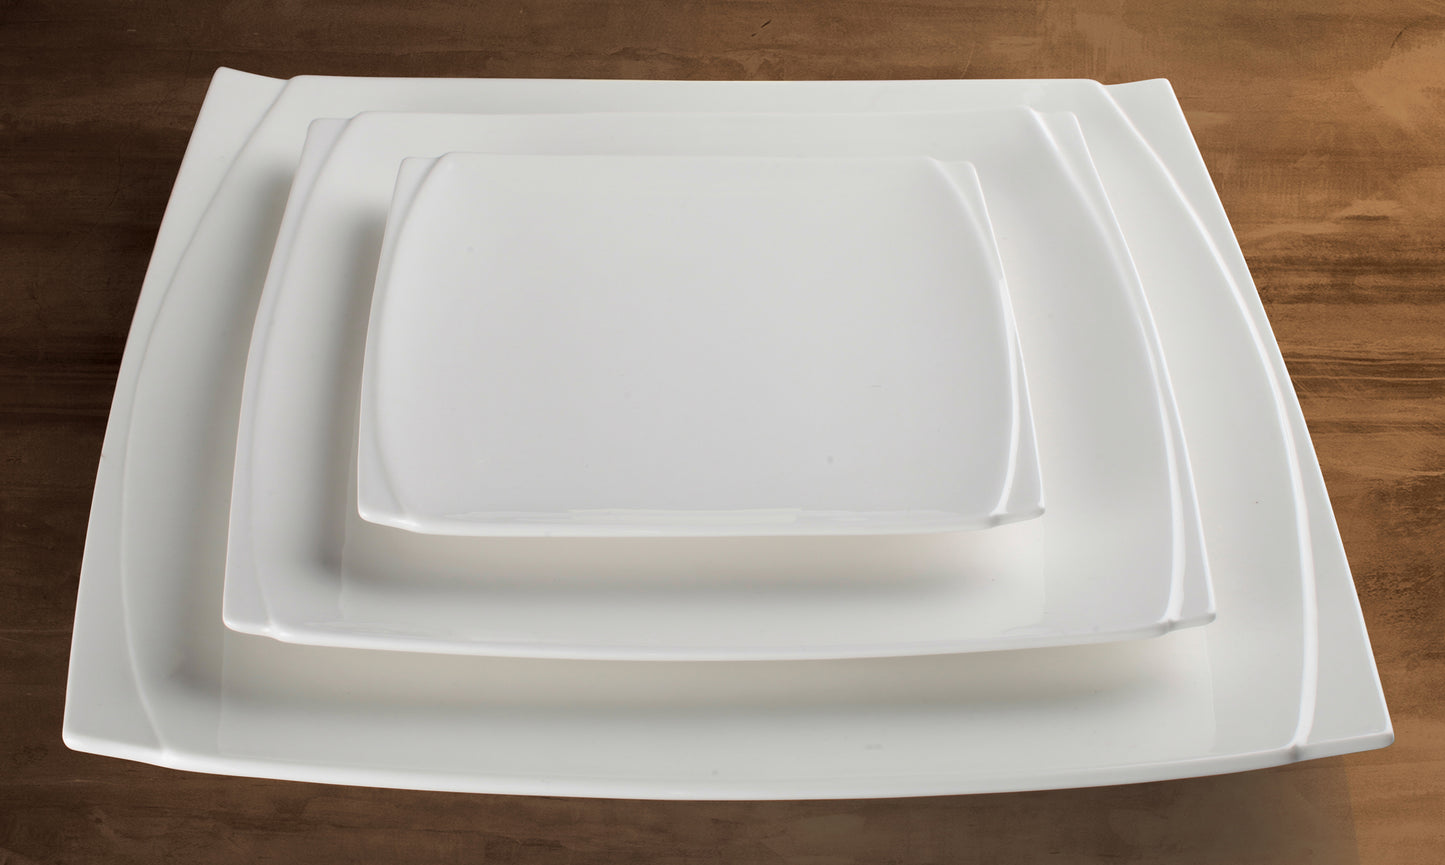 WDP009-101 - 7-1/2"Sq Porcelain Square Plate, Bright White, 24 pcs/case